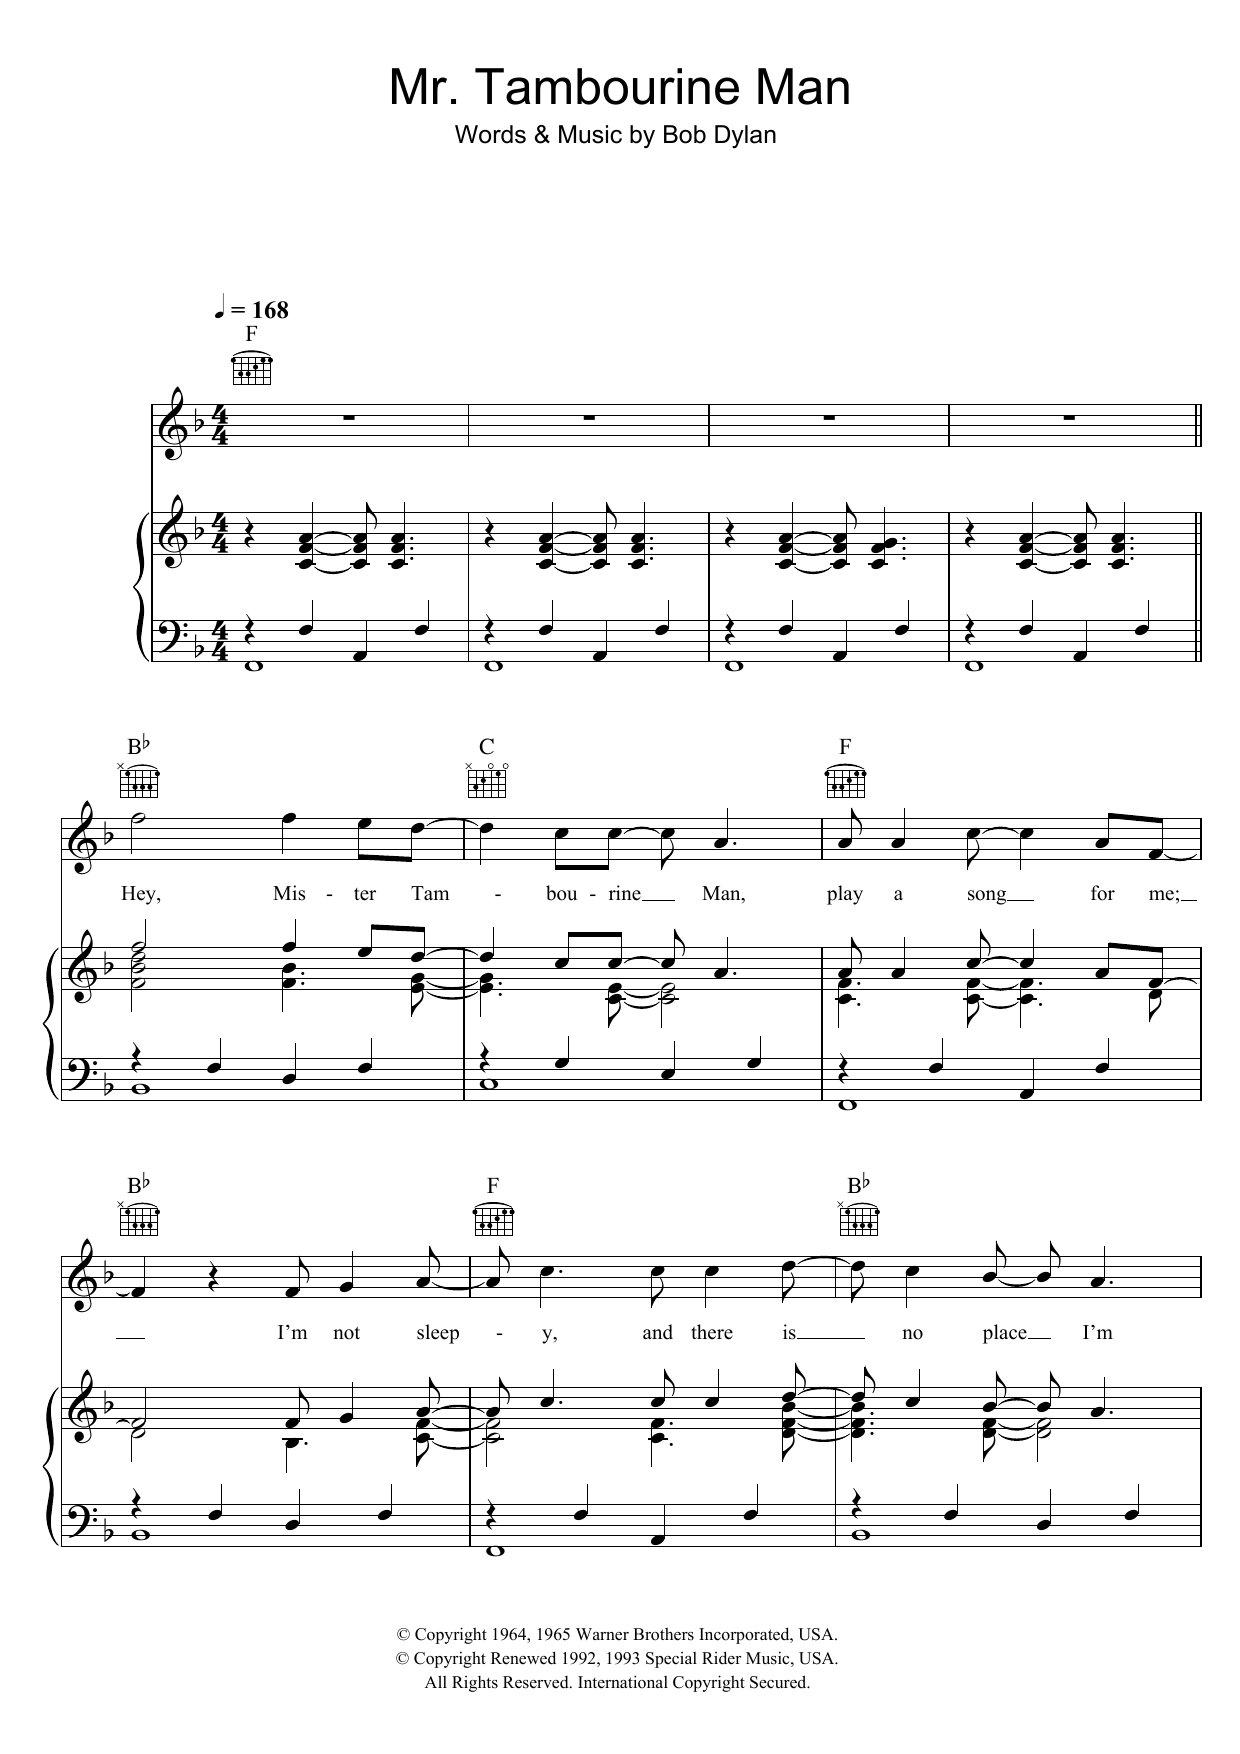 Bob Dylan Mr. Tambourine Man Sheet Music Notes & Chords for Ukulele - Download or Print PDF